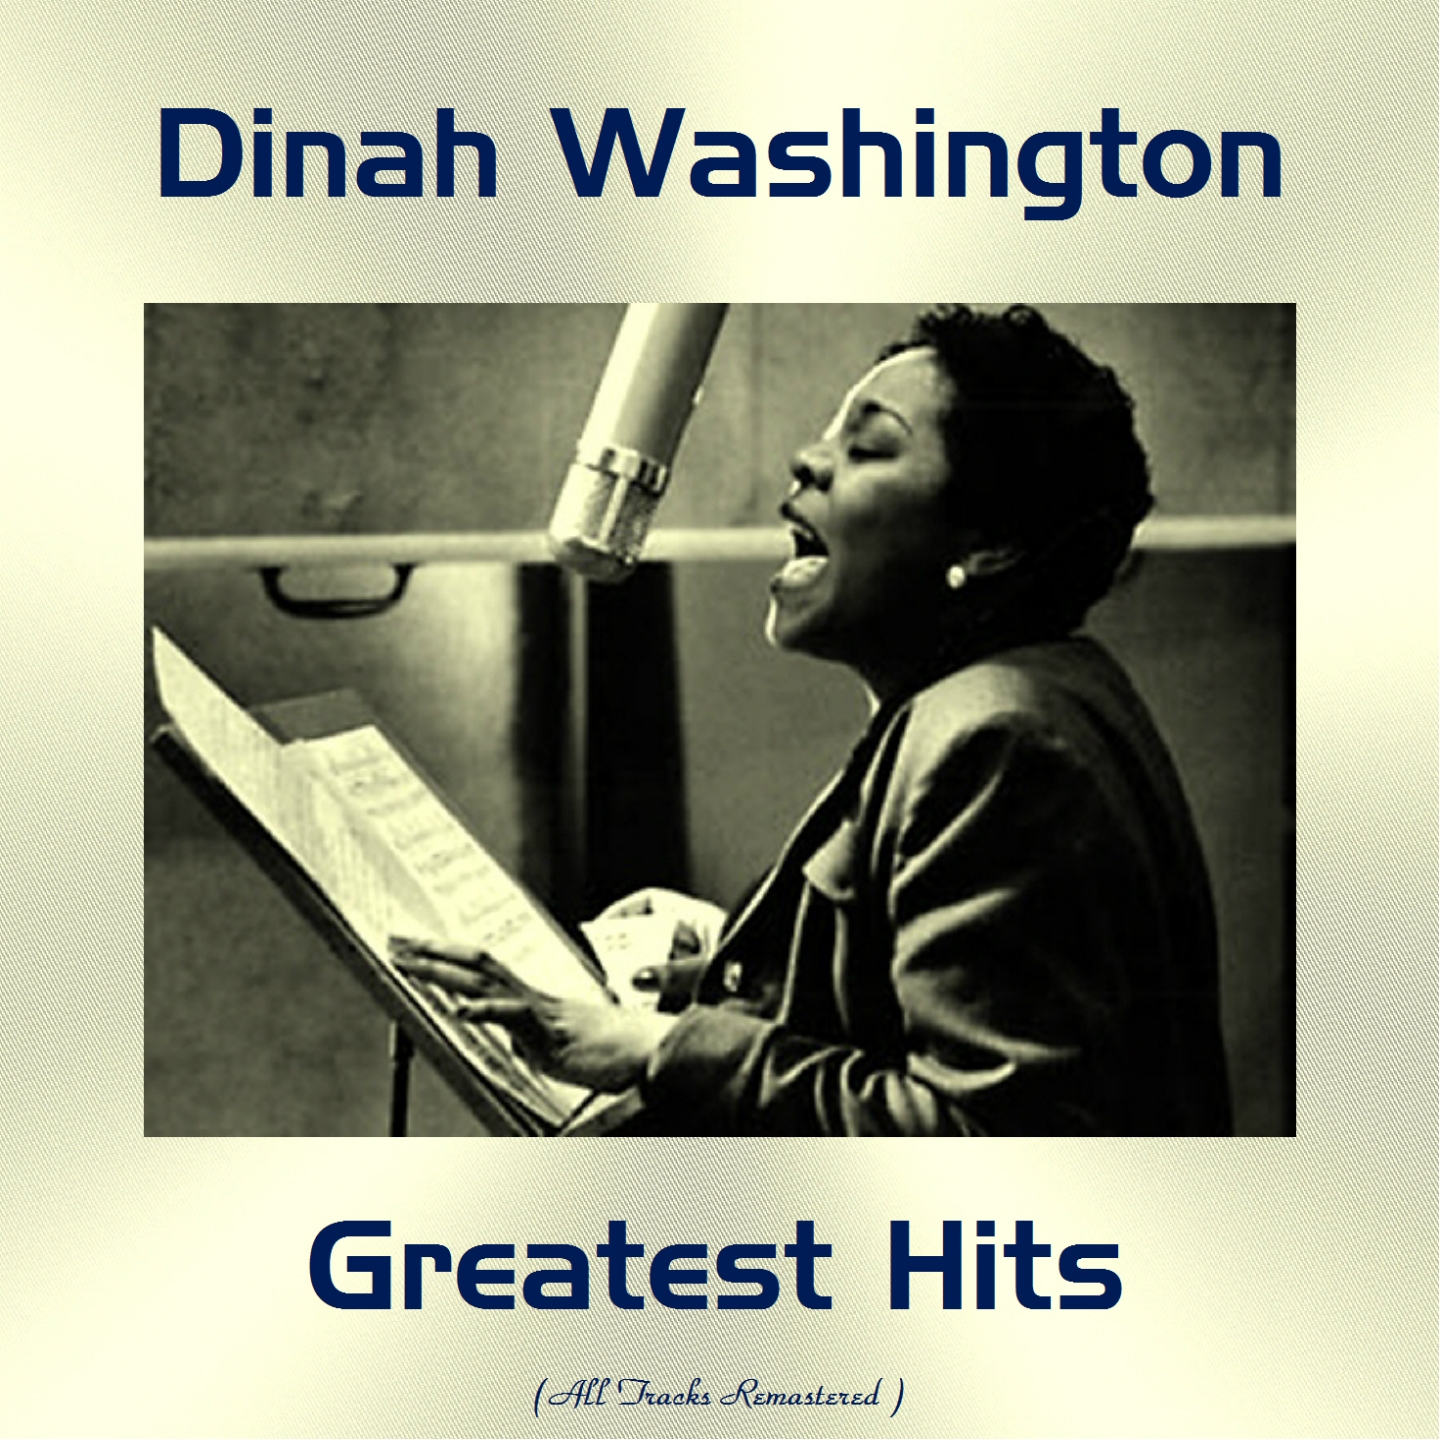 Dinah Washington Greatest Hits (All Tracks Remastered)